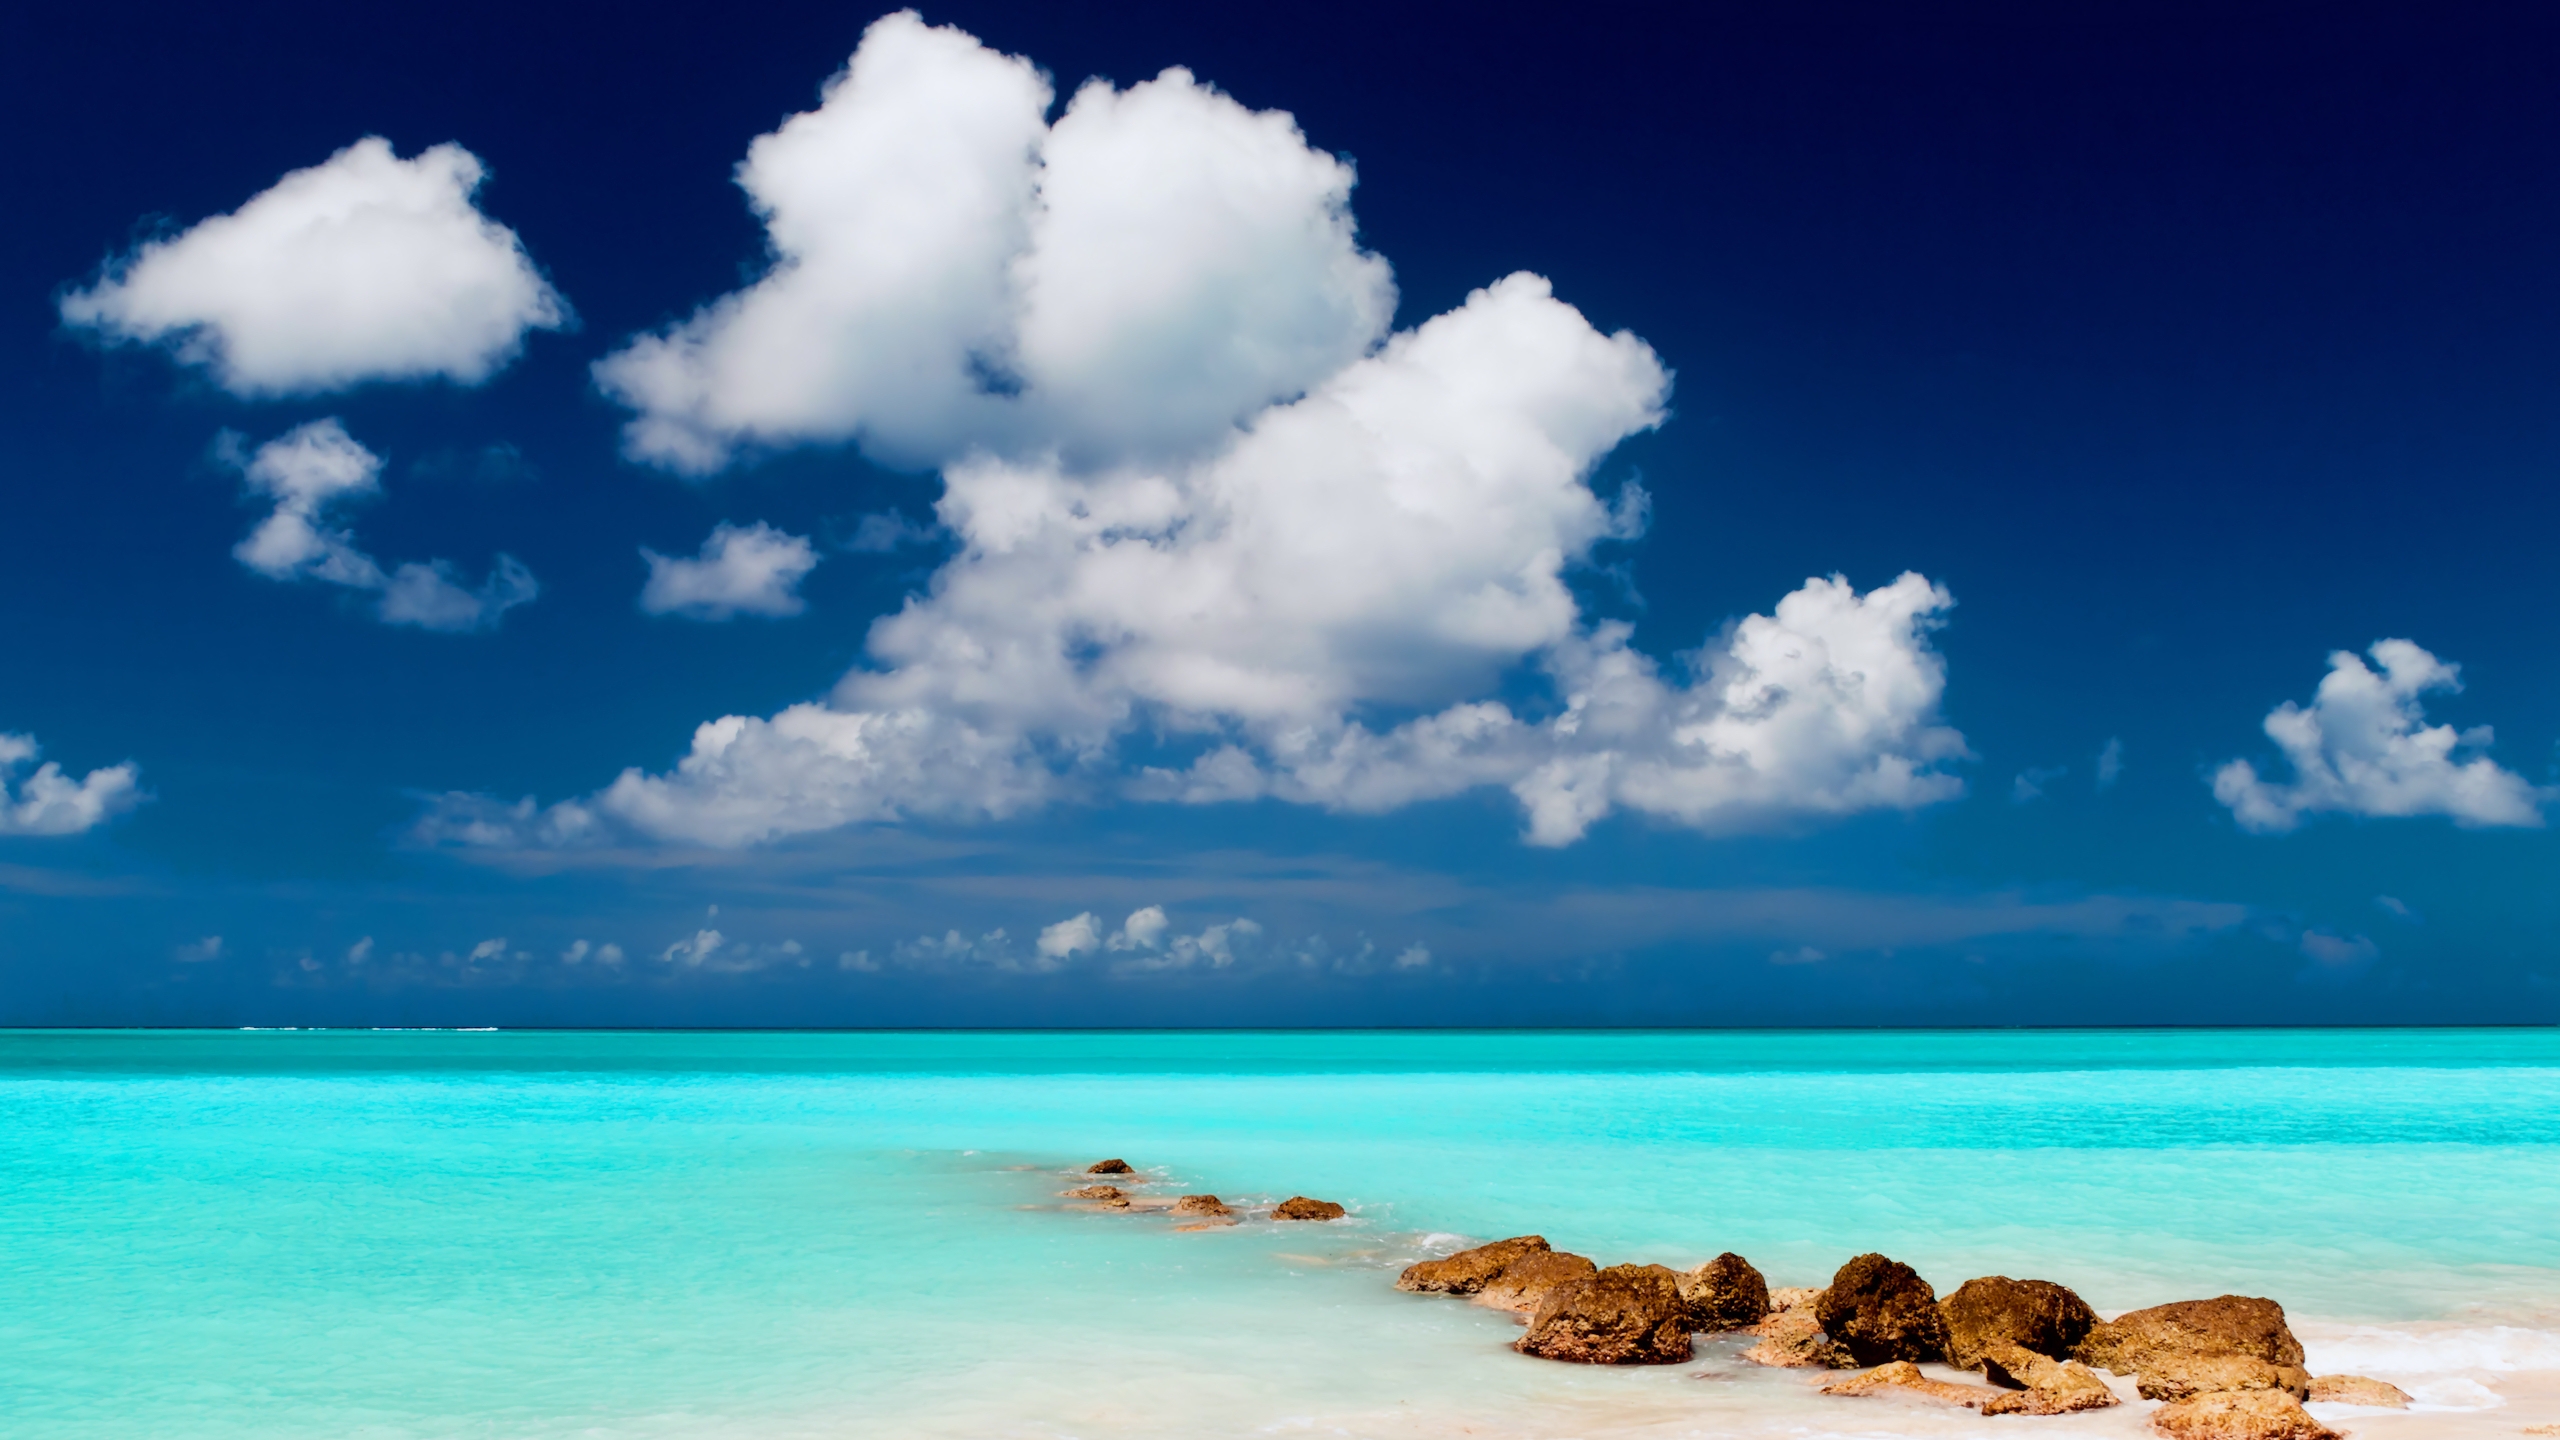 Blue Sea Landscape for 2560x1440 HDTV resolution